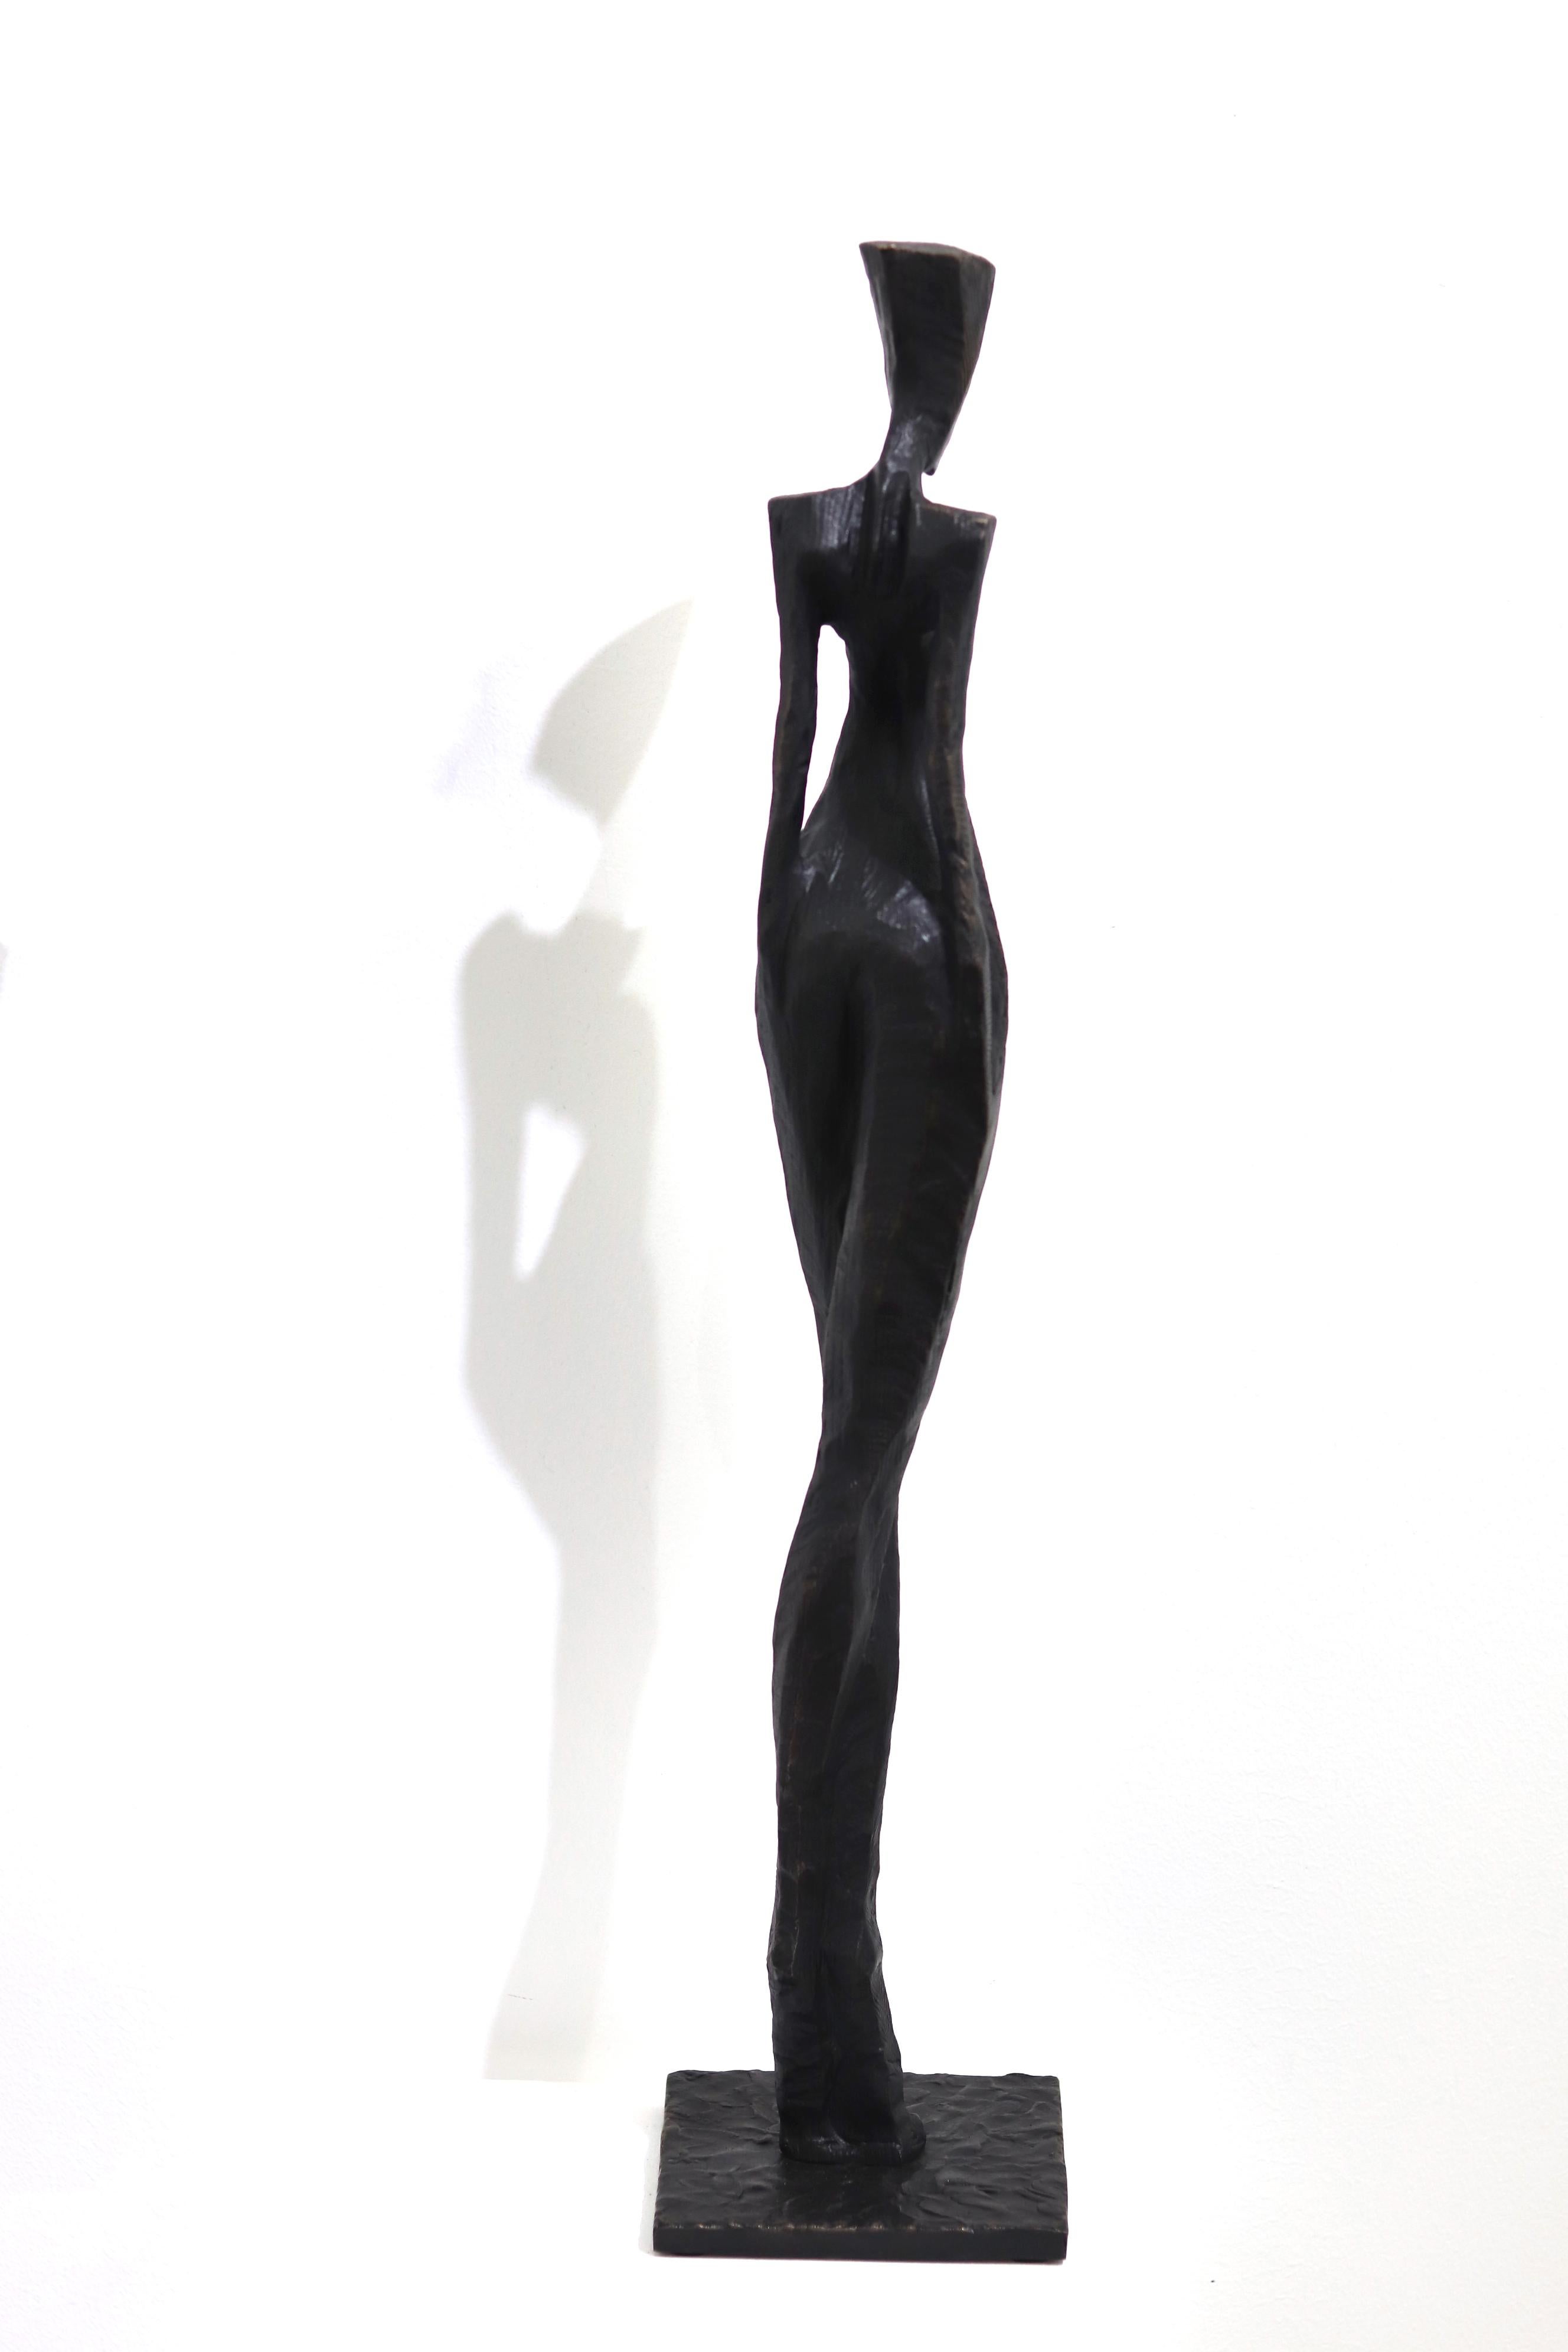 Nathalie, grande sculpture figurative abstraite cubiste moderne en bronze massif - Or Nude Sculpture par Nando Kallweit